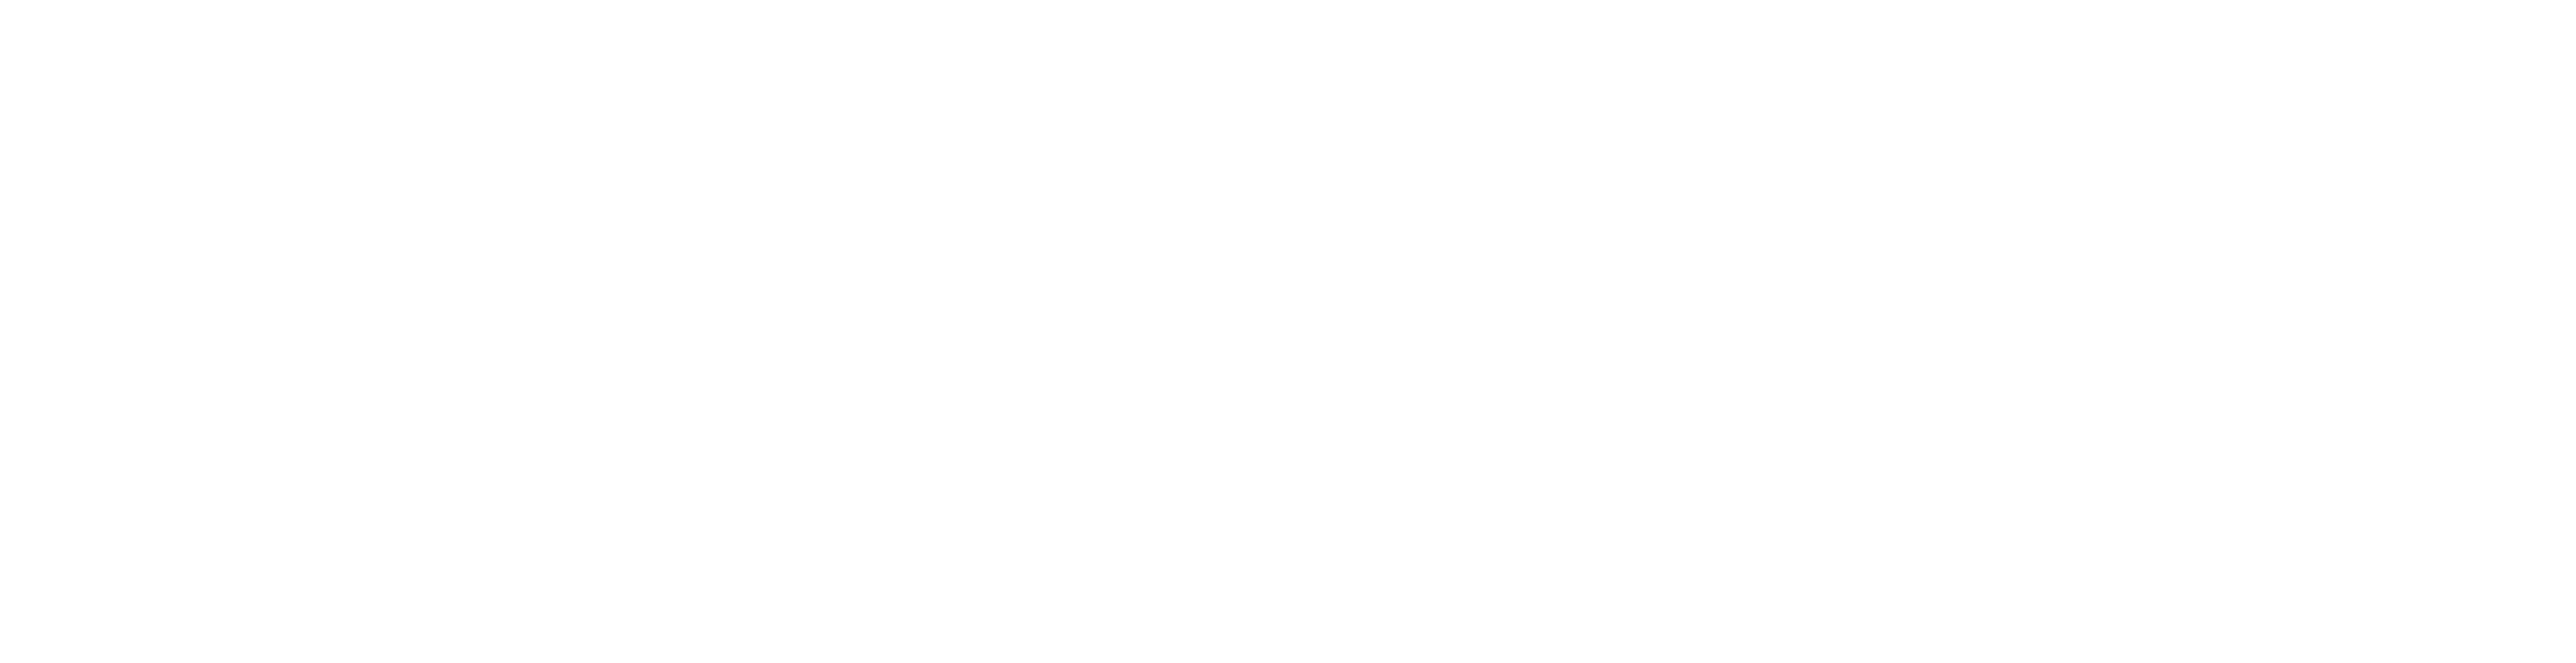 Image of Stigbergs pizzeria